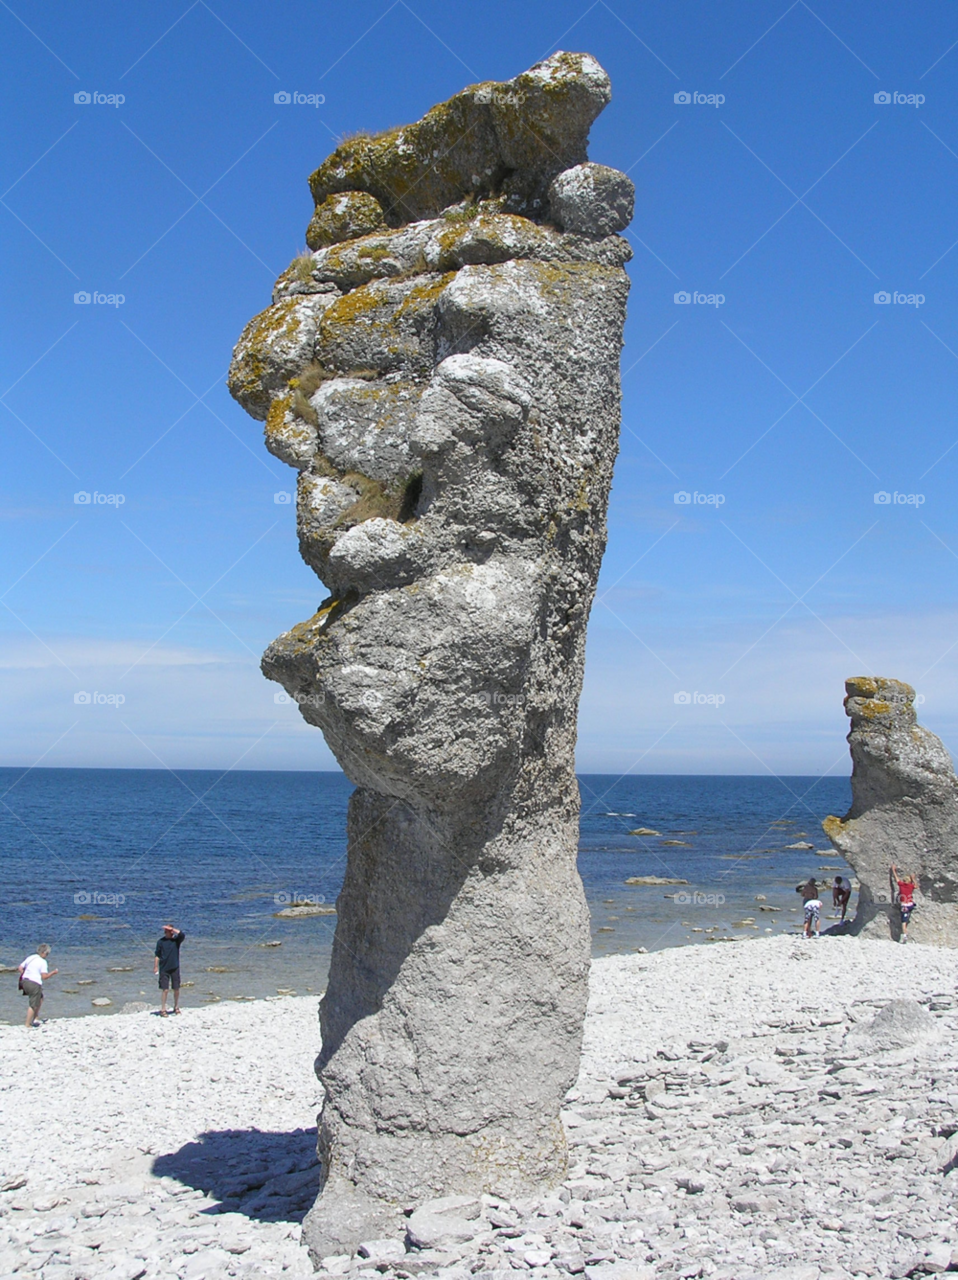 sea gotland stone rock by MagnusPm